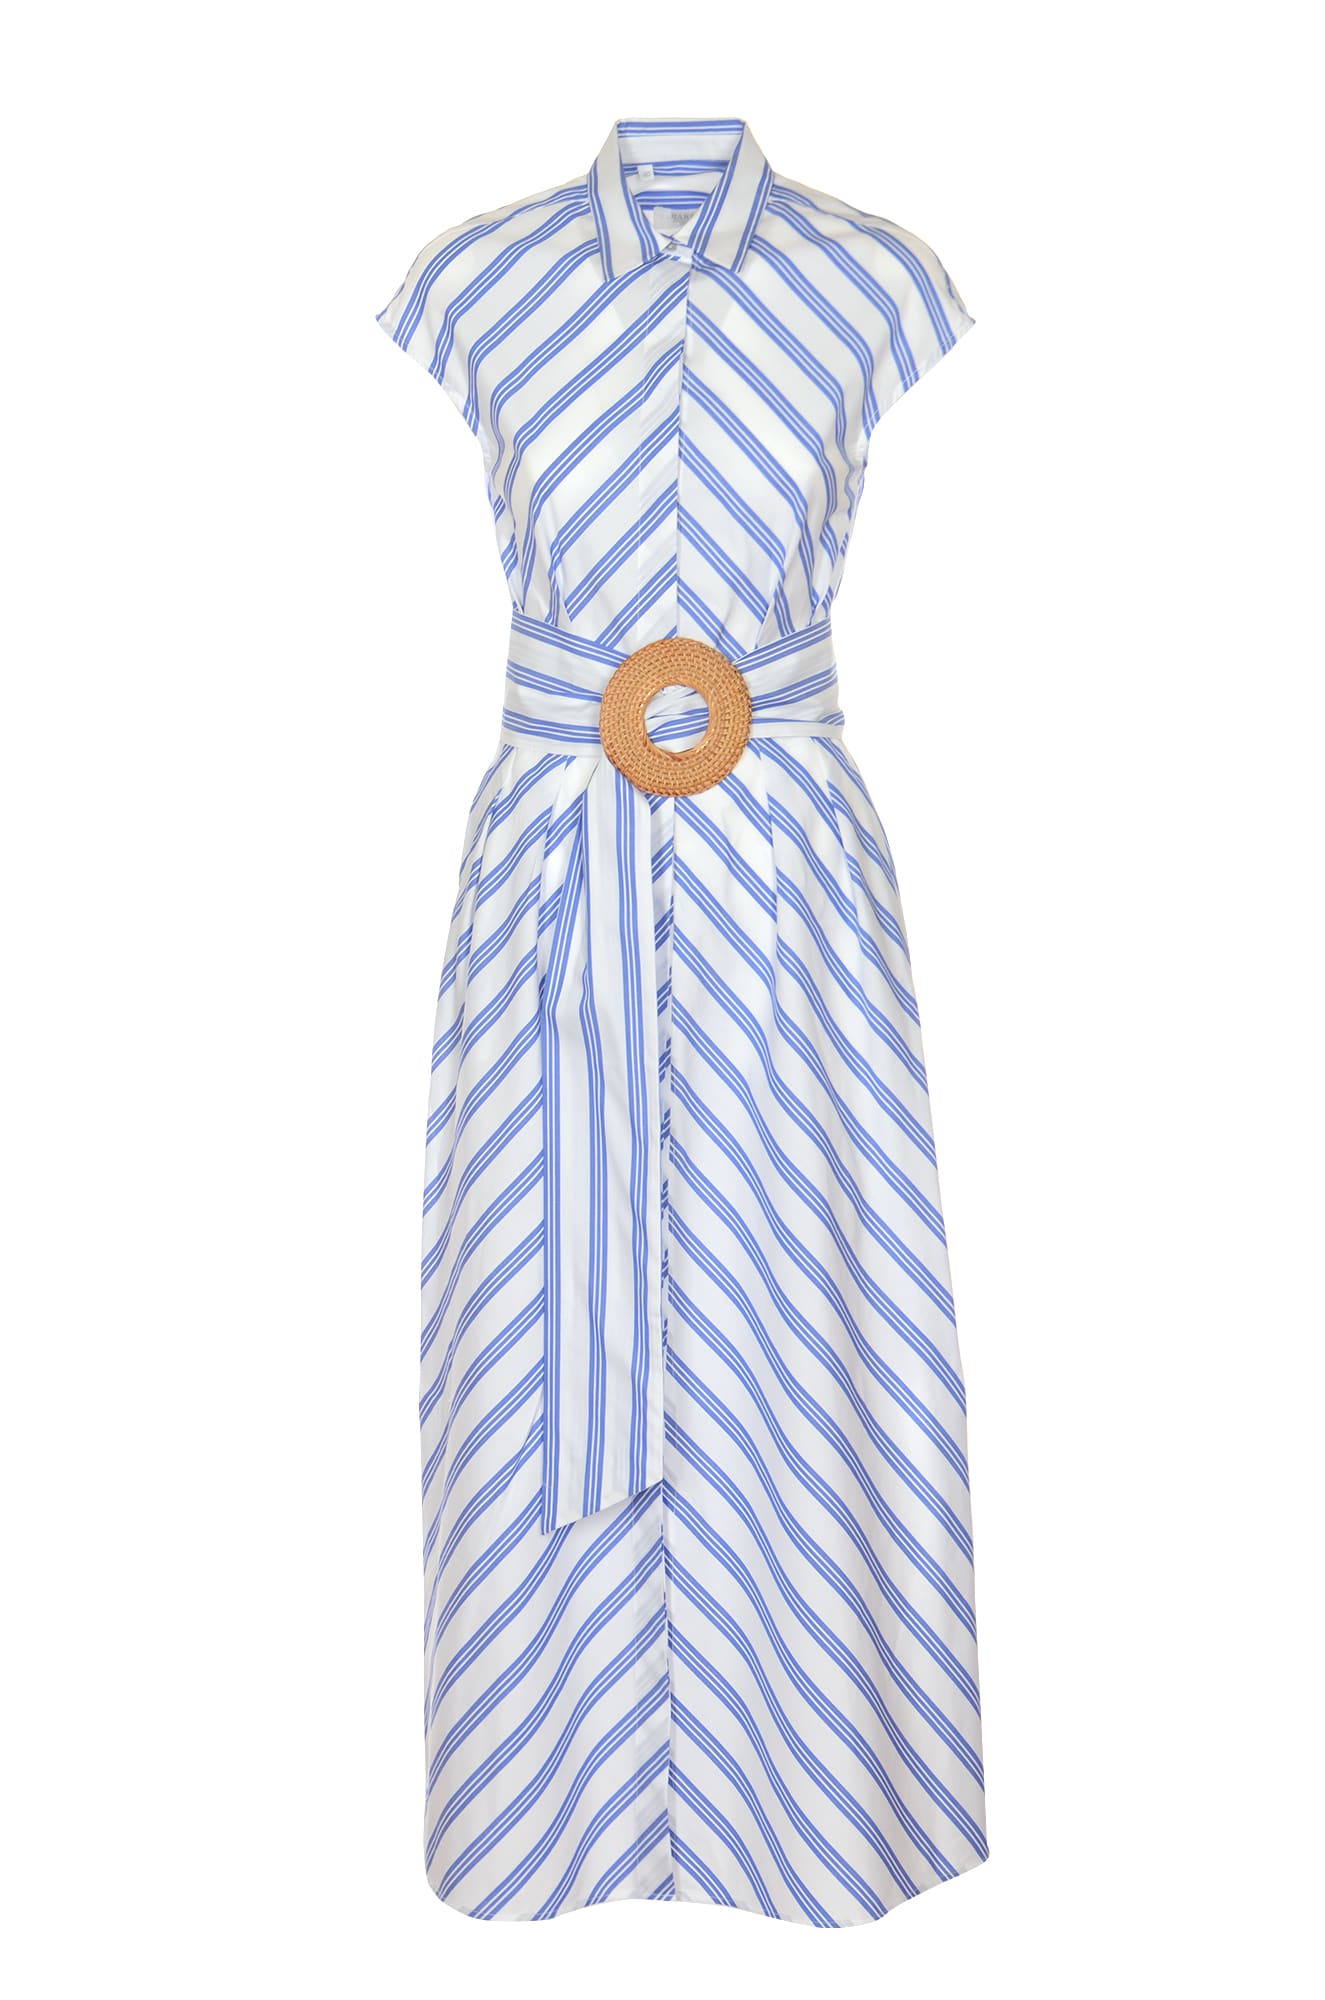 Barba Napoli Stripe Patterned Shirt Dress